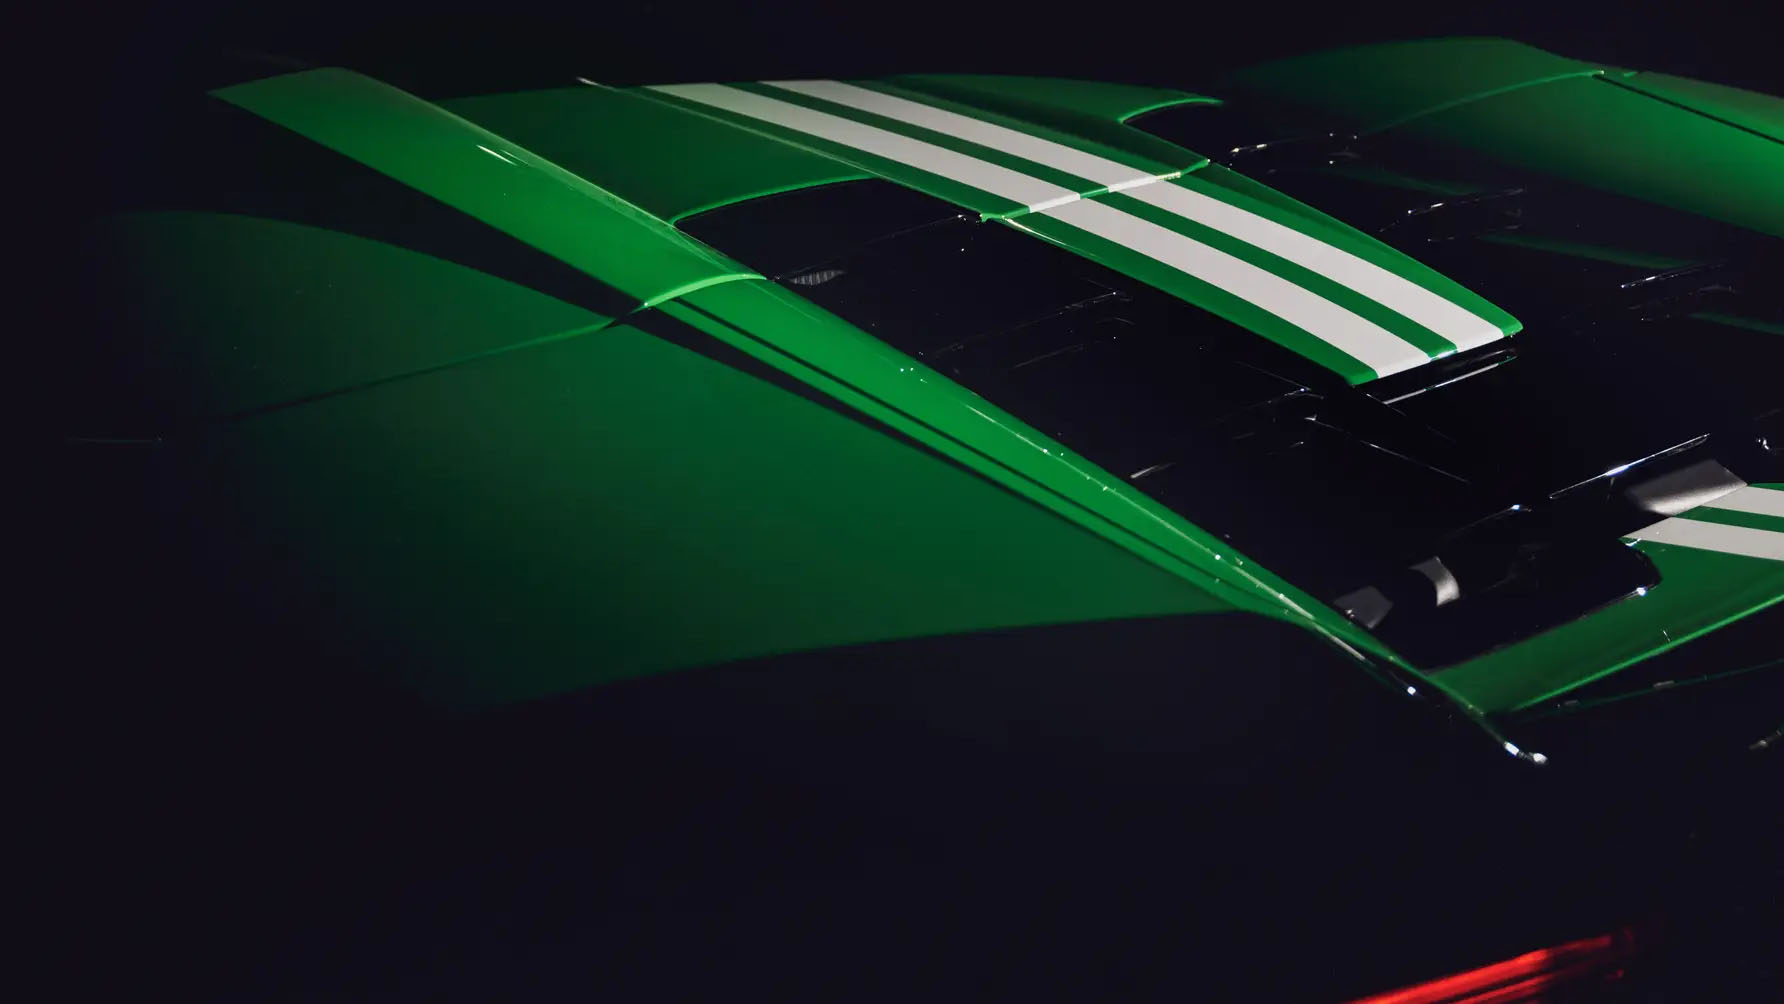 Lamborghini celebrates its 60th anniversary with three limited-edition Huracáns